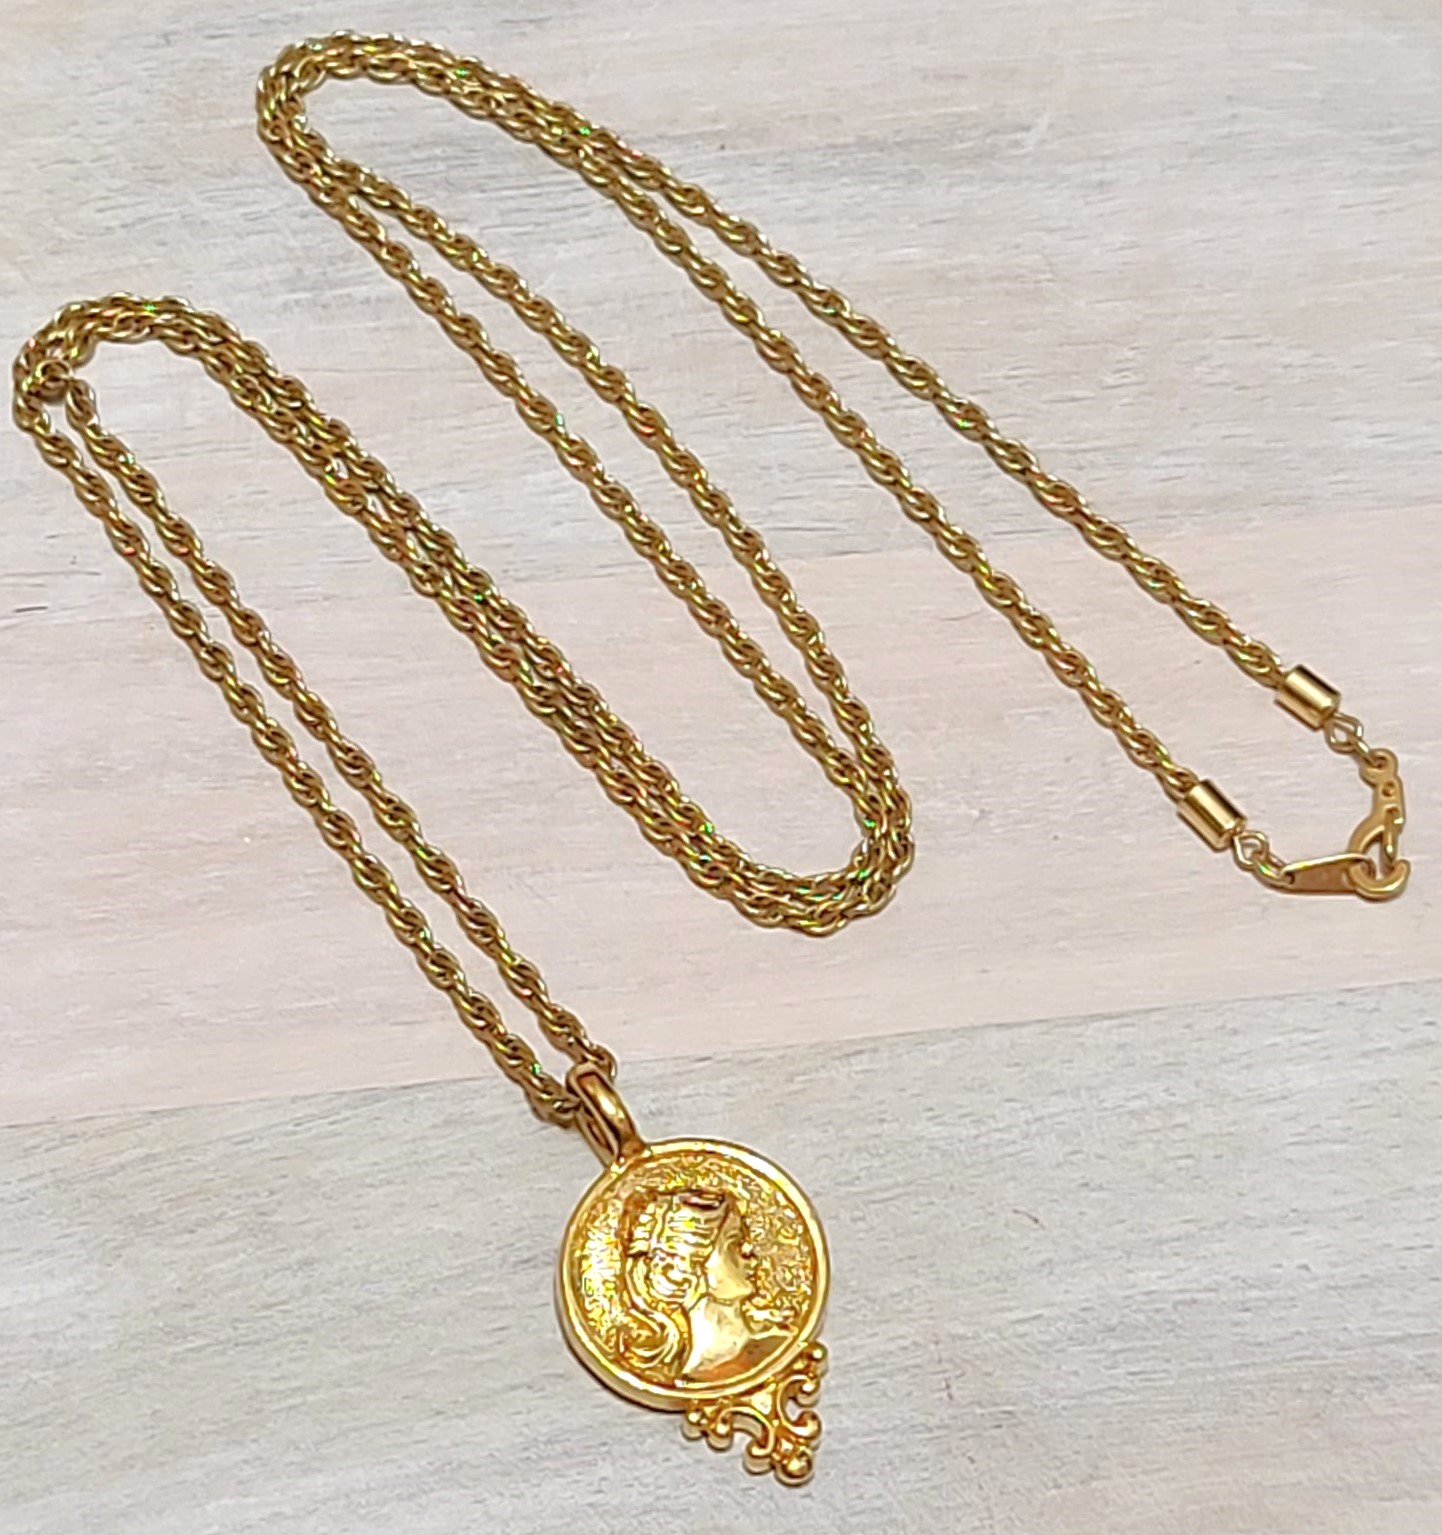 Vintage cameo pendant necklace, goldtone 1970's